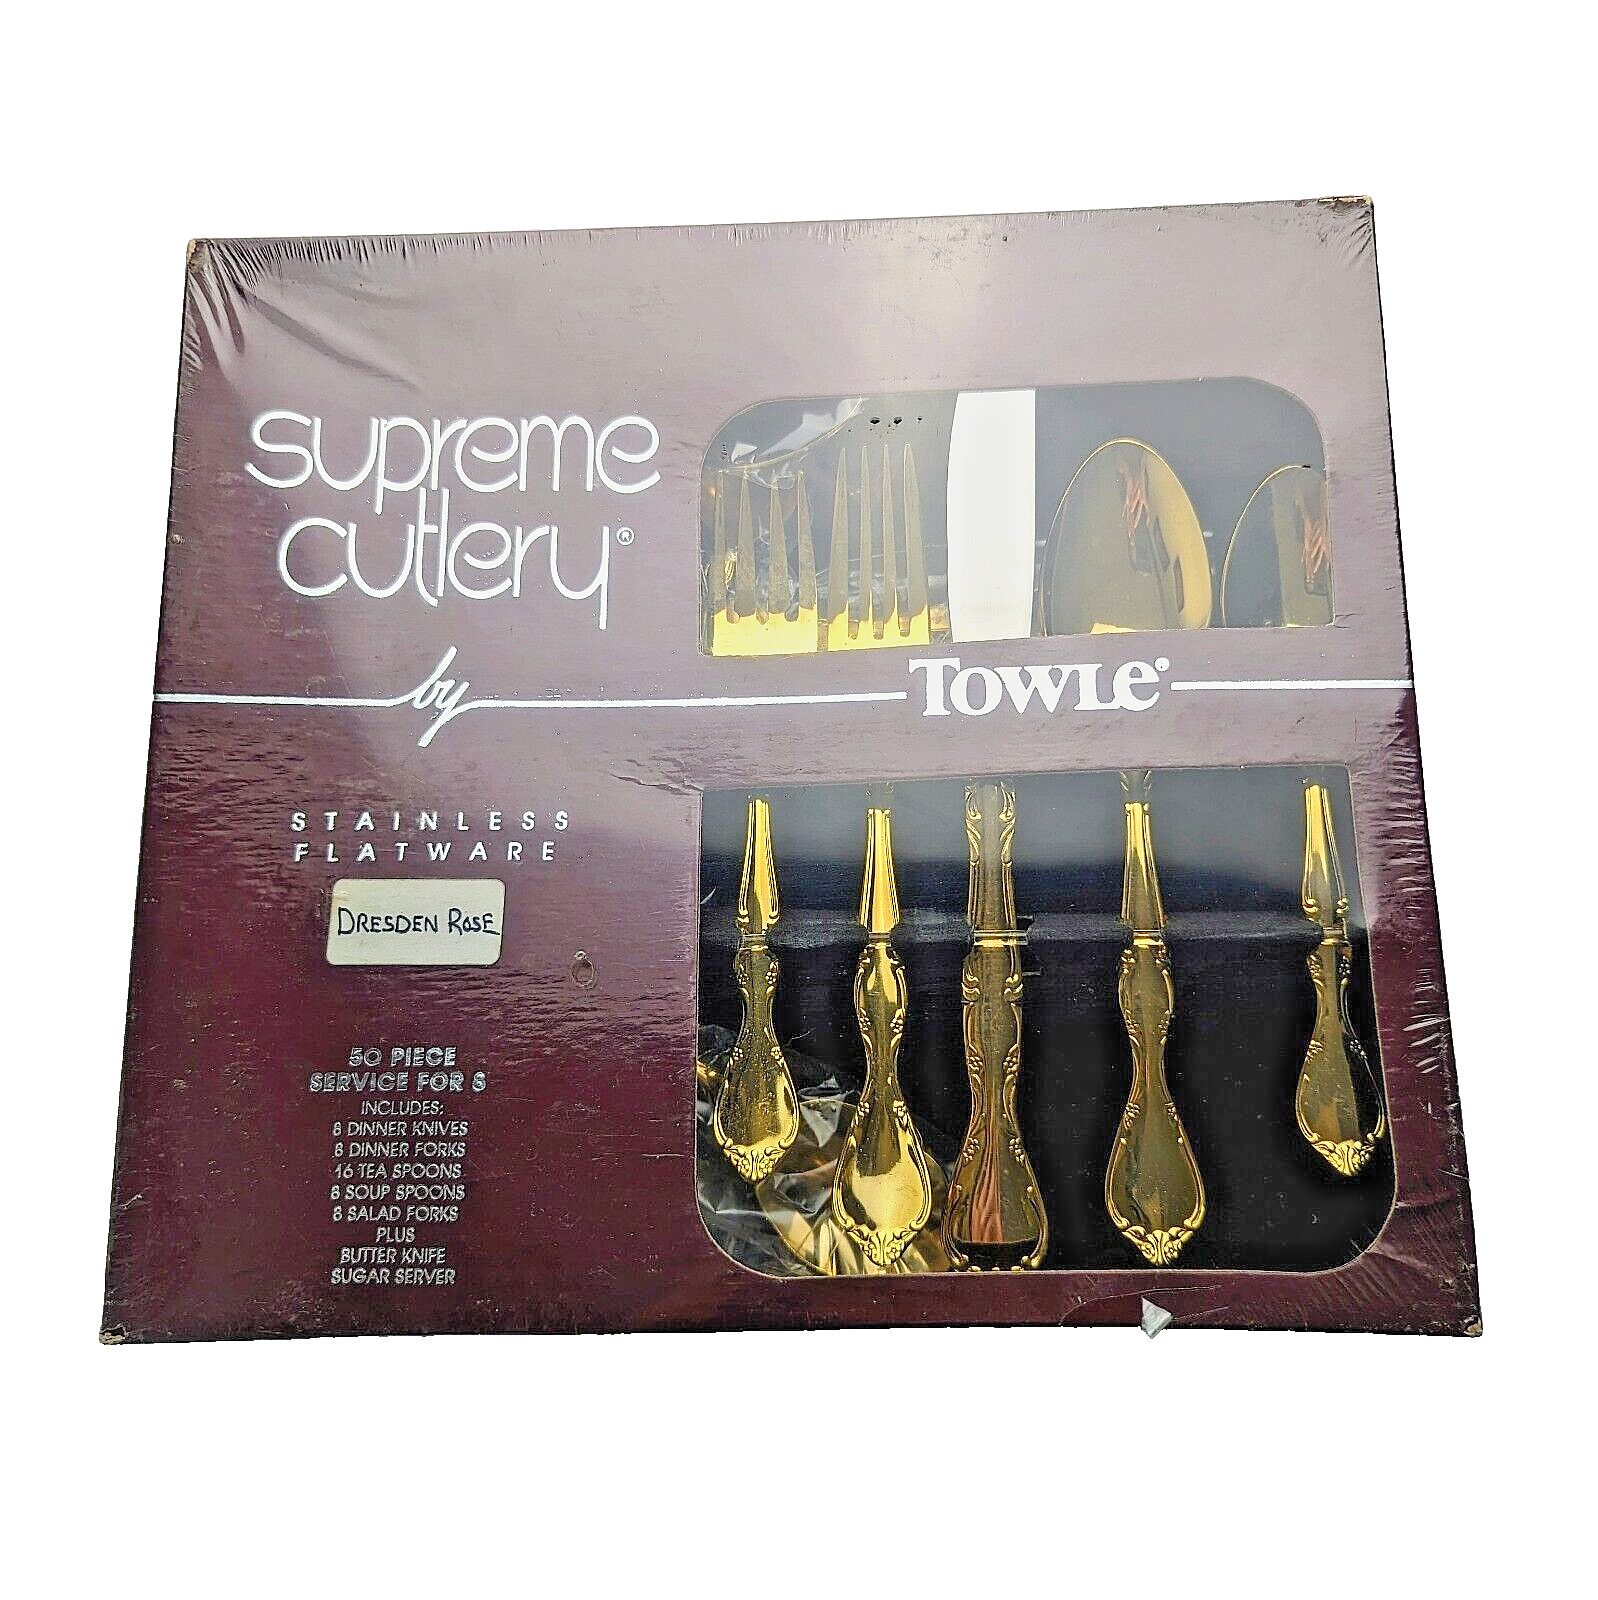 Vtg 80s Towle Supreme Cutlery 50-Piece Gold Tone Flatware Set Dresden Rose 1982